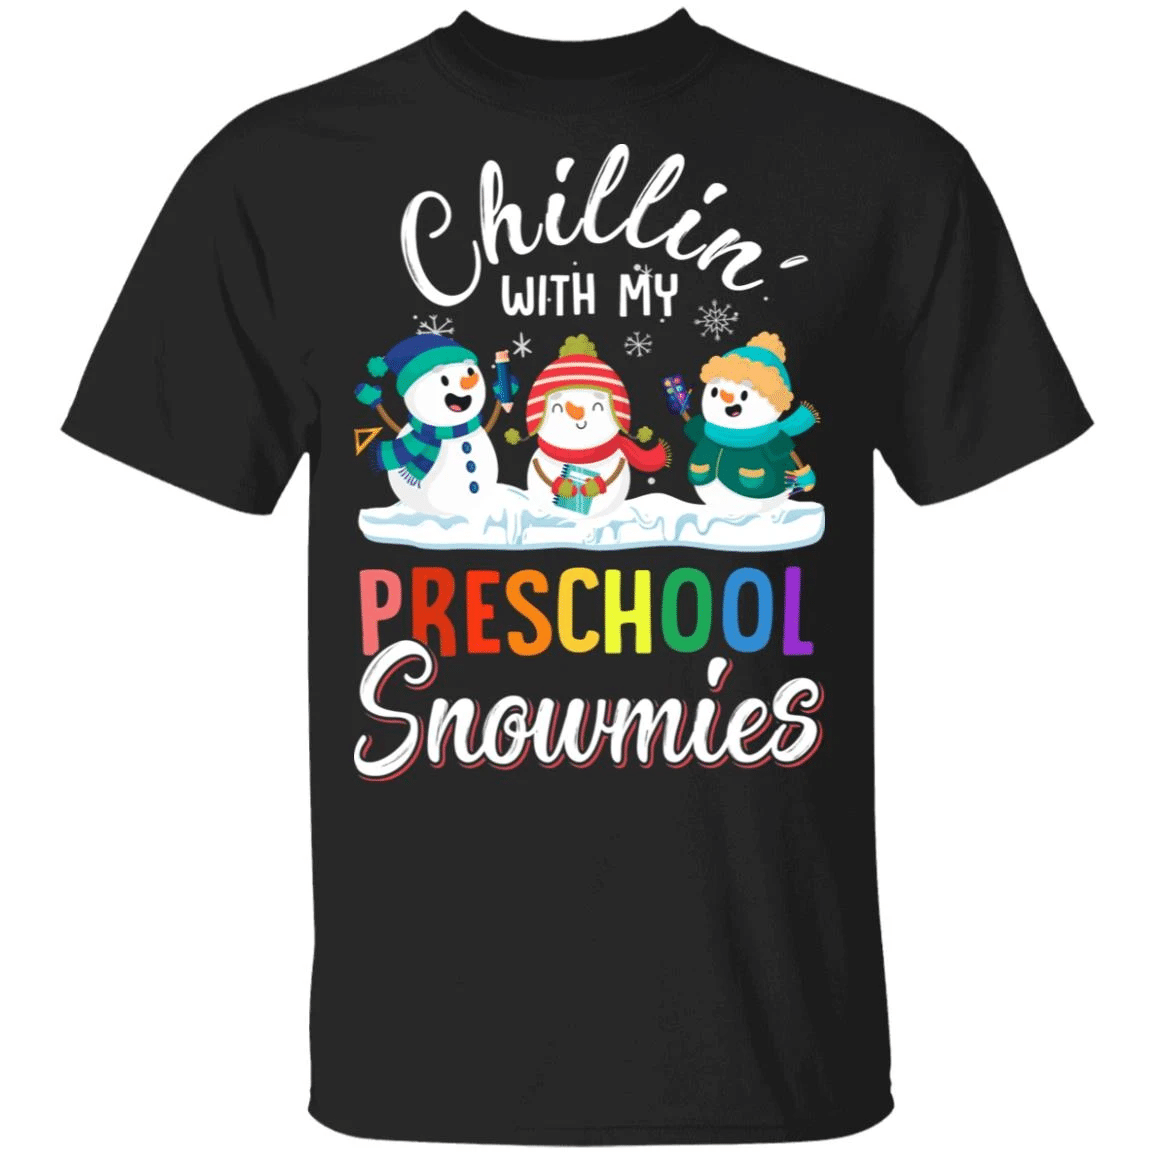 Chillin' With preschool Snowmies Funny Snowman Christmas Shirt Style: Unisex T-shirt, Color: Black